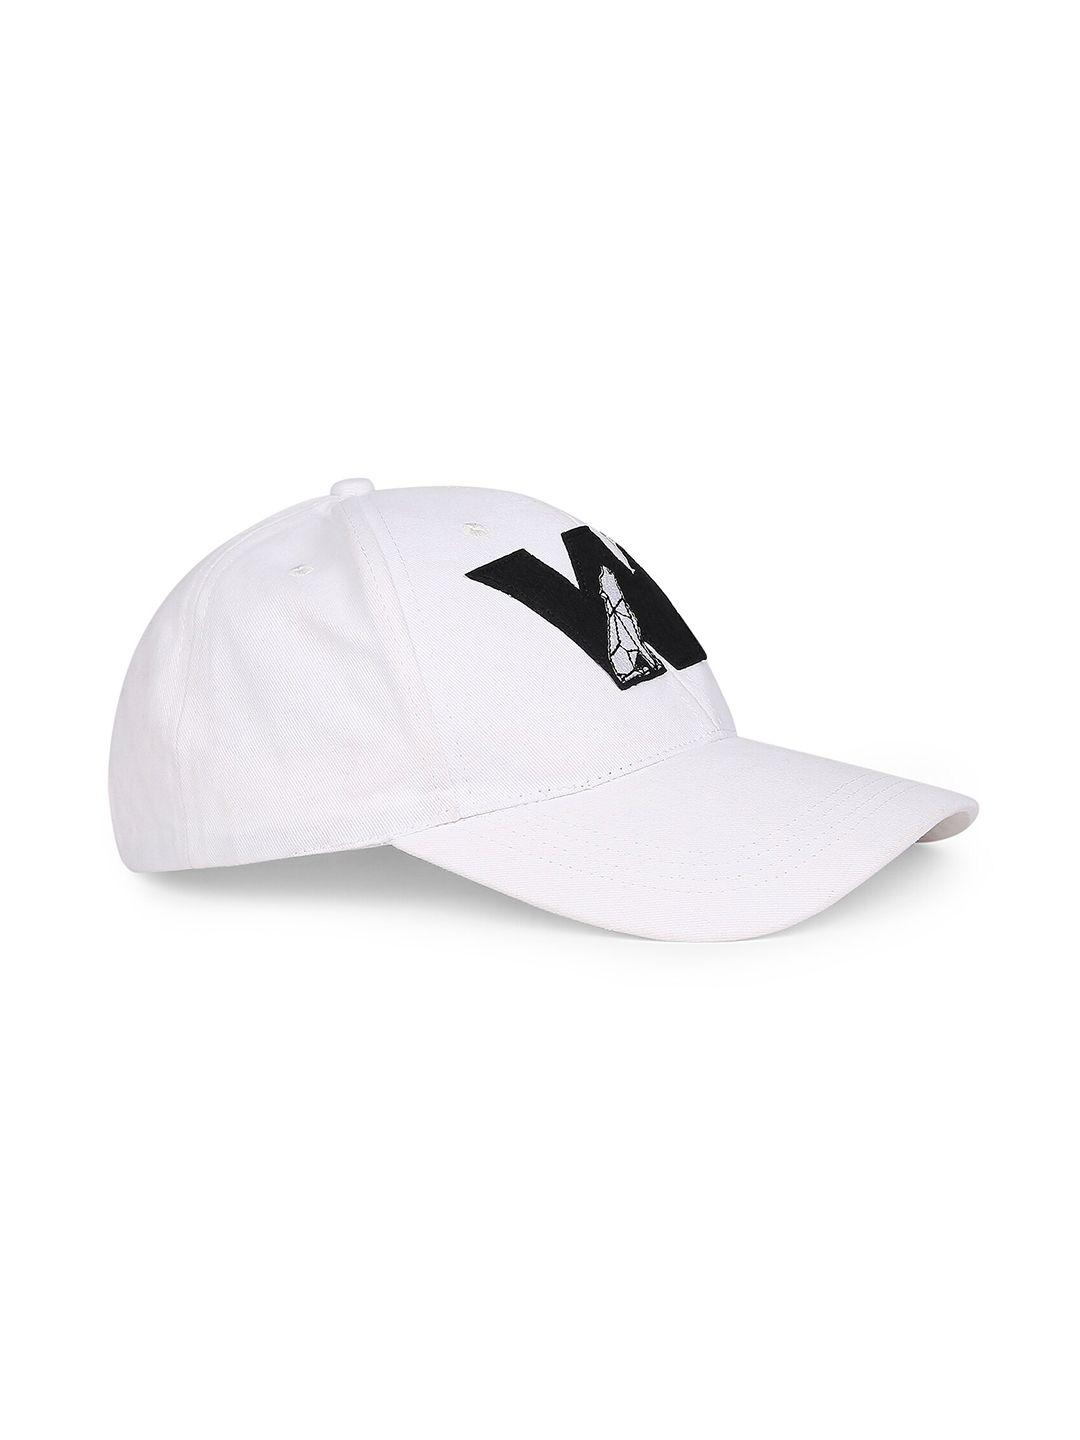 waimea men white & black printed baseball cap